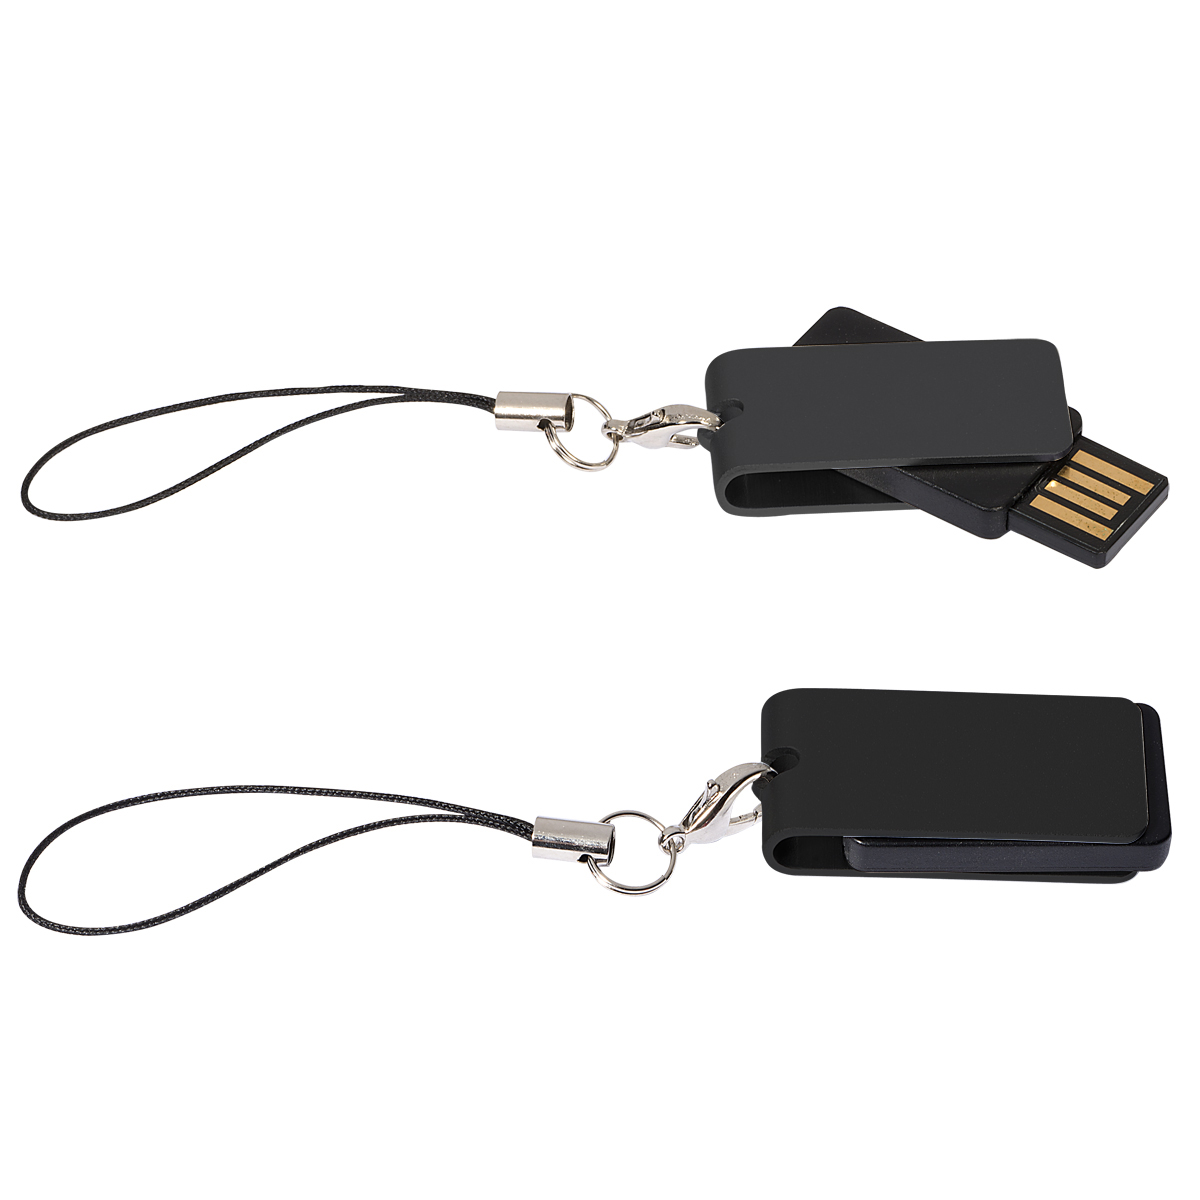 SlimFoldable USB Memory Flash Drive - 4GB